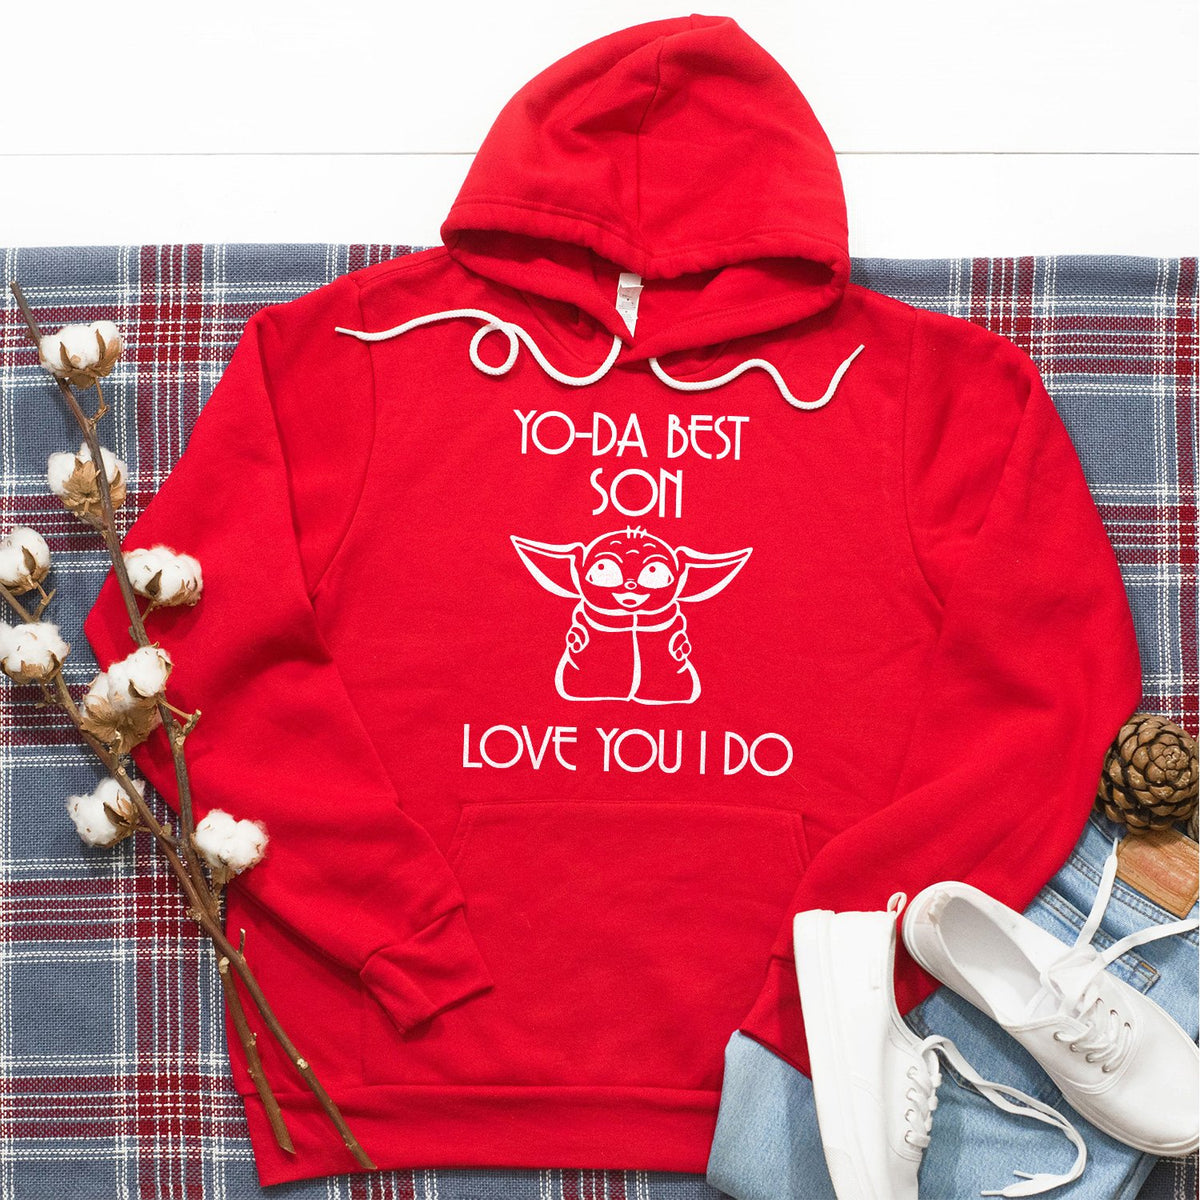 Yo-Da Best Son Love You I Do - Hoodie Sweatshirt